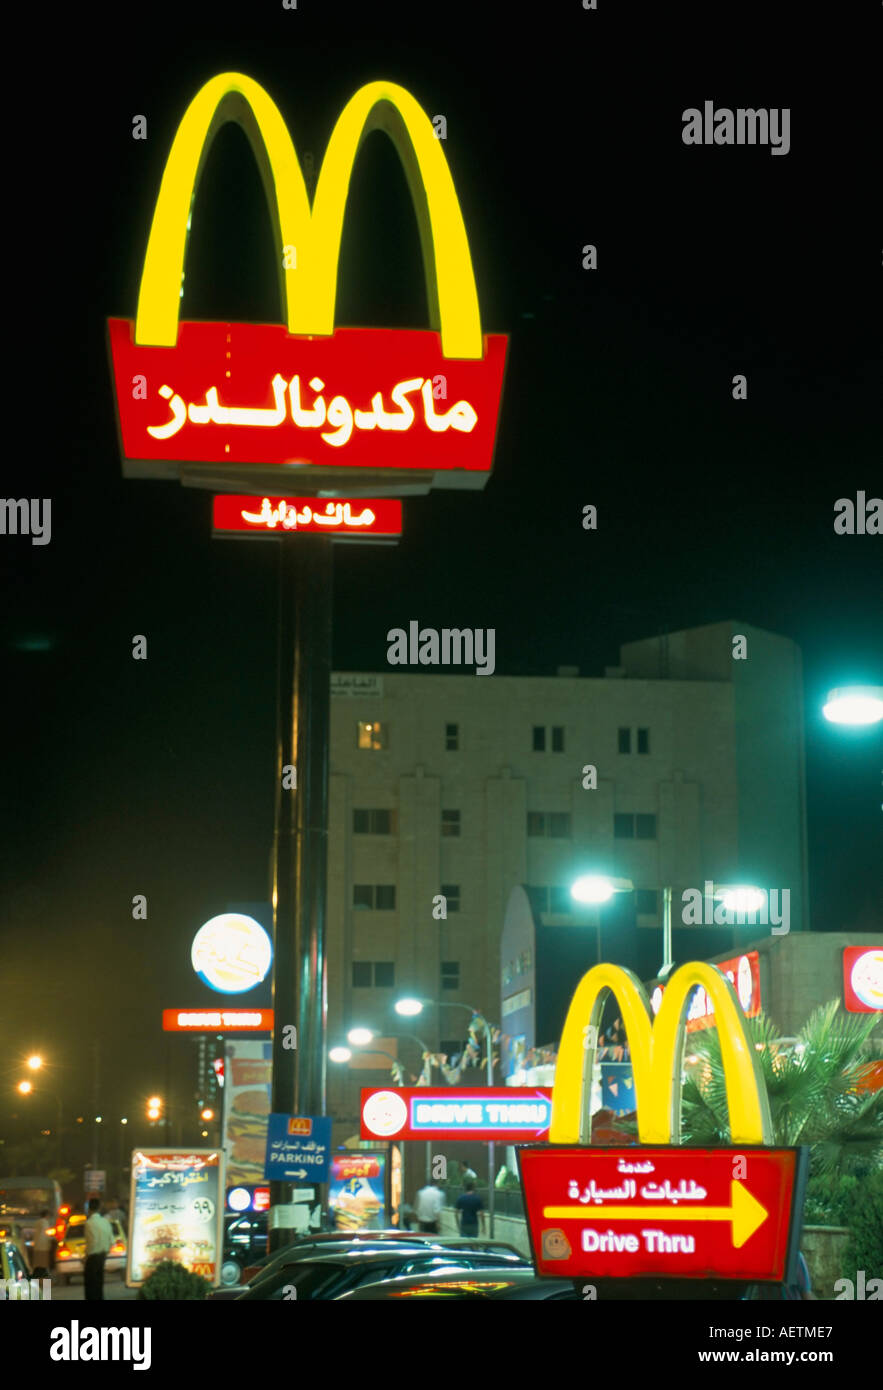 courtesy minor The alps McDonald s sign in Arabic Amman Jordan Middle East Stock Photo - Alamy